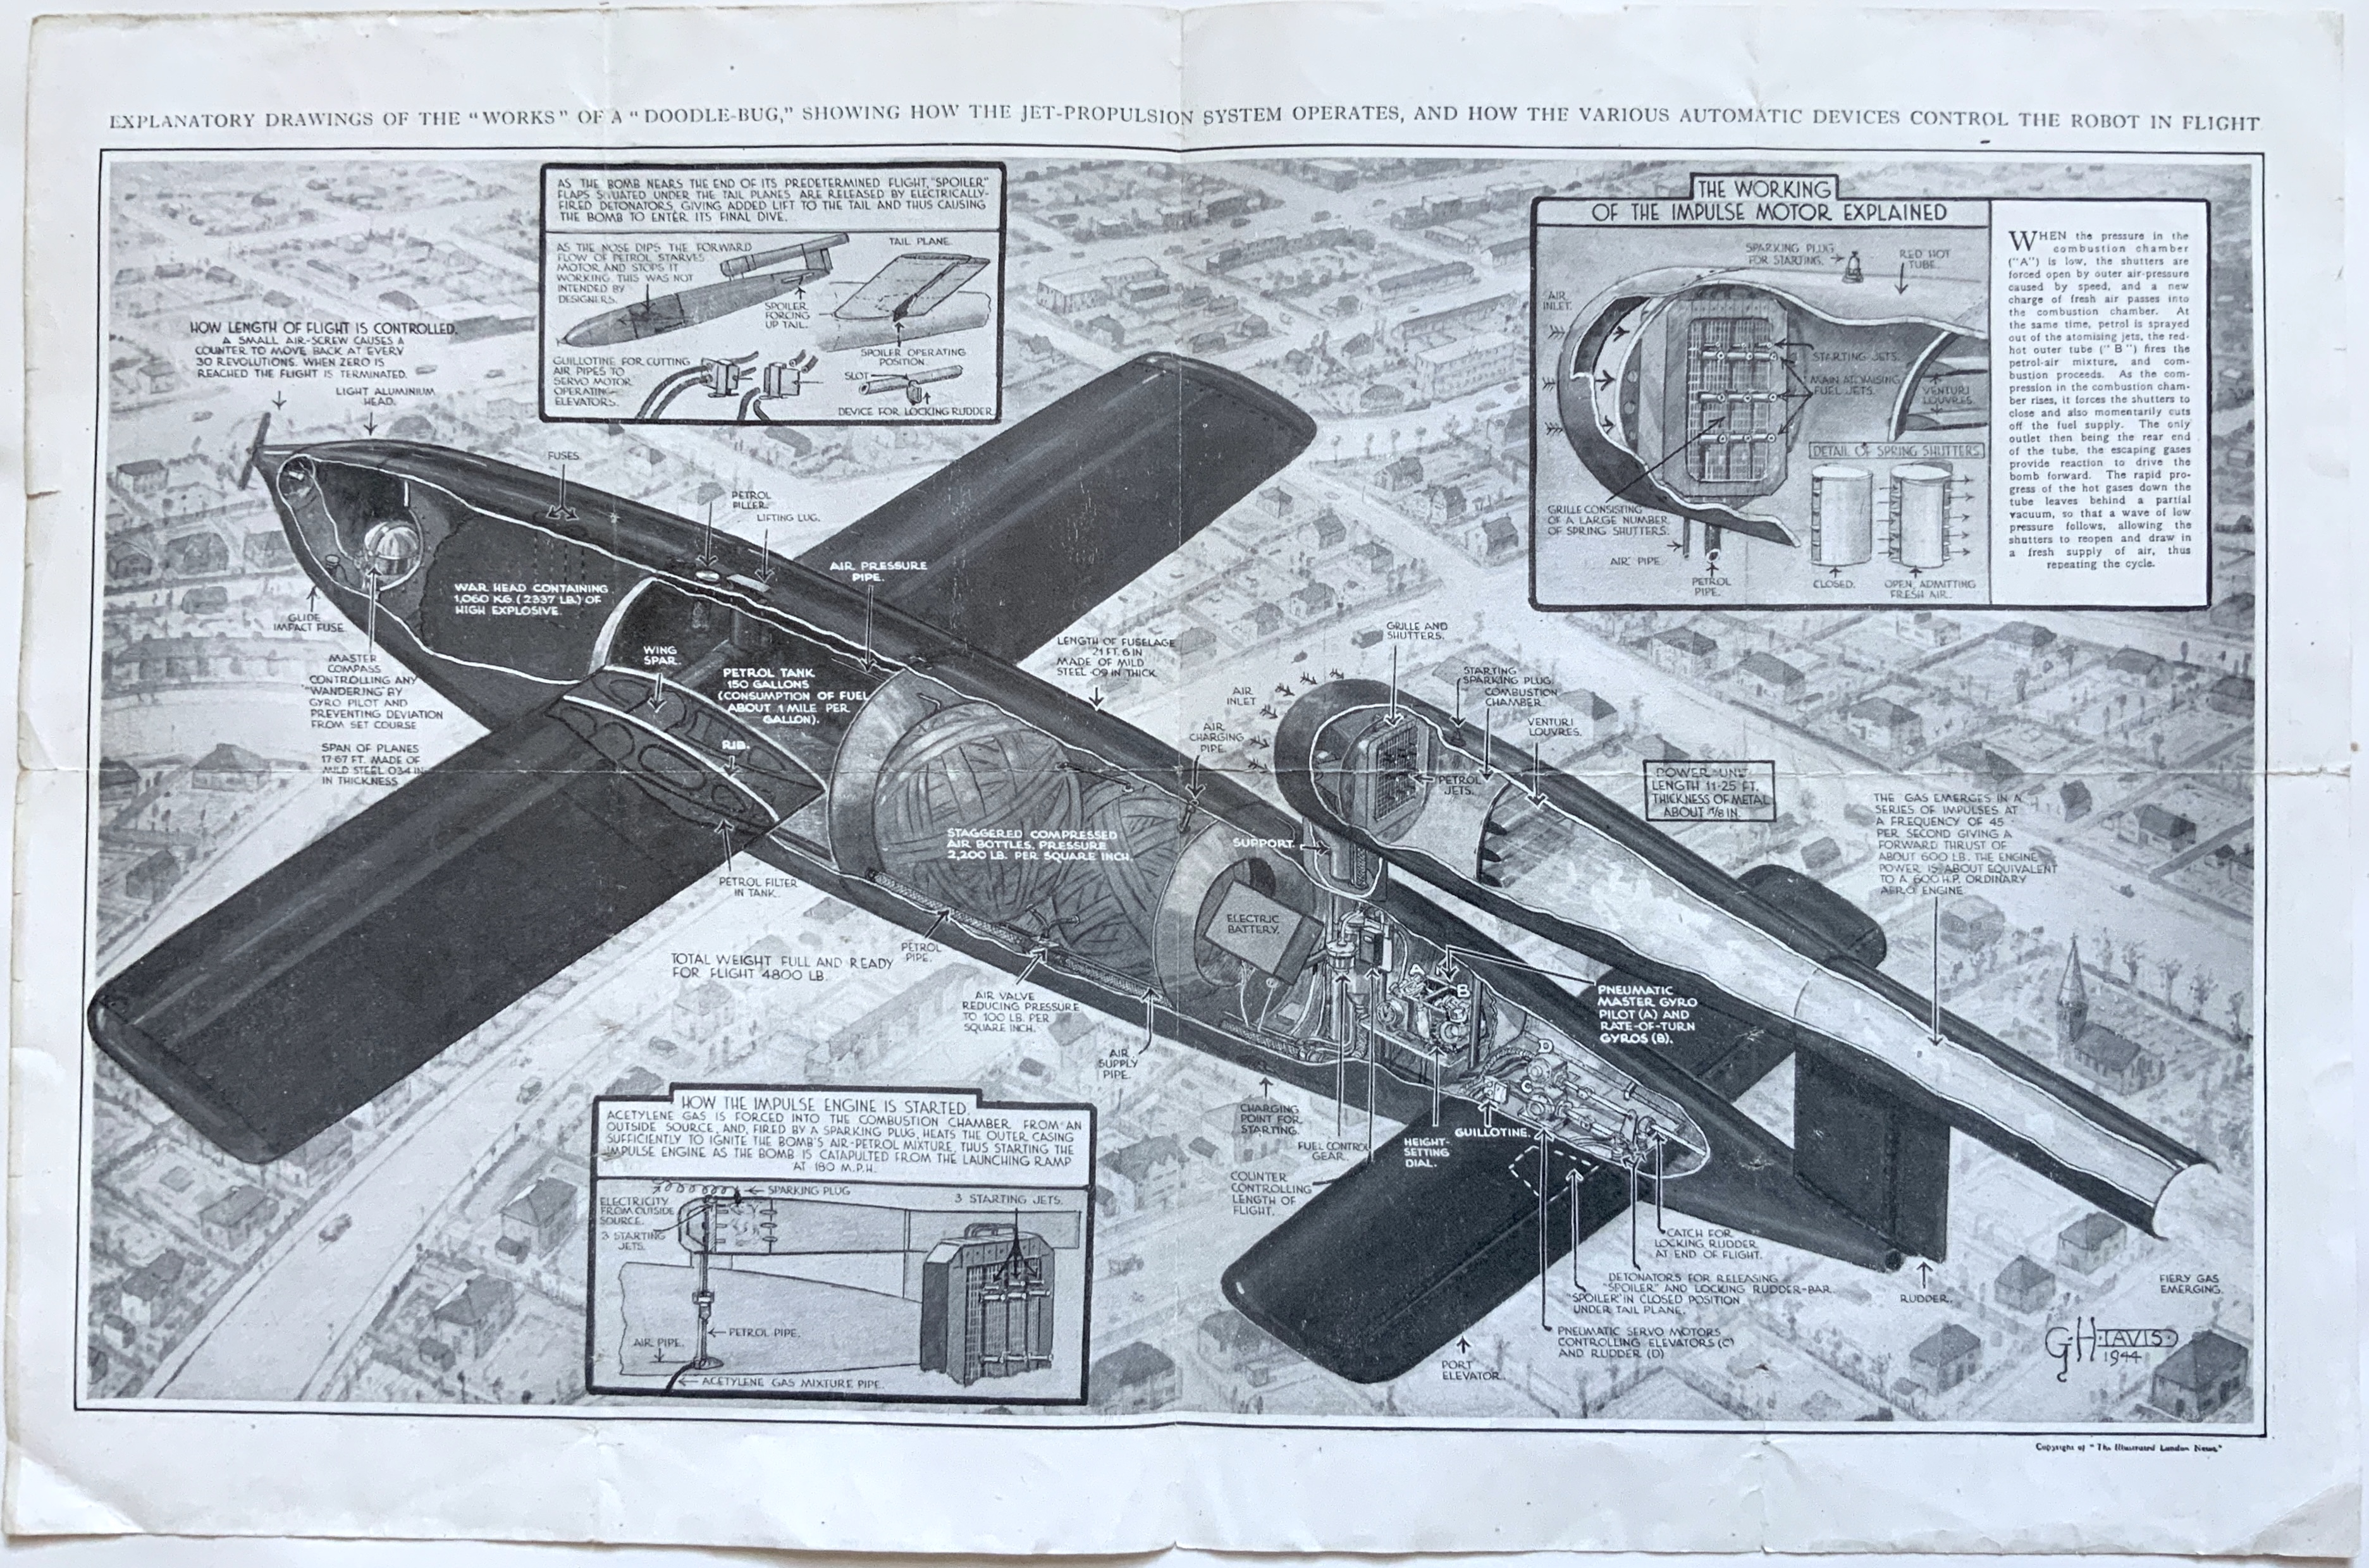 J950	V1 ROCKET: SECRETS OF THE FLYING BOMB REVEALED